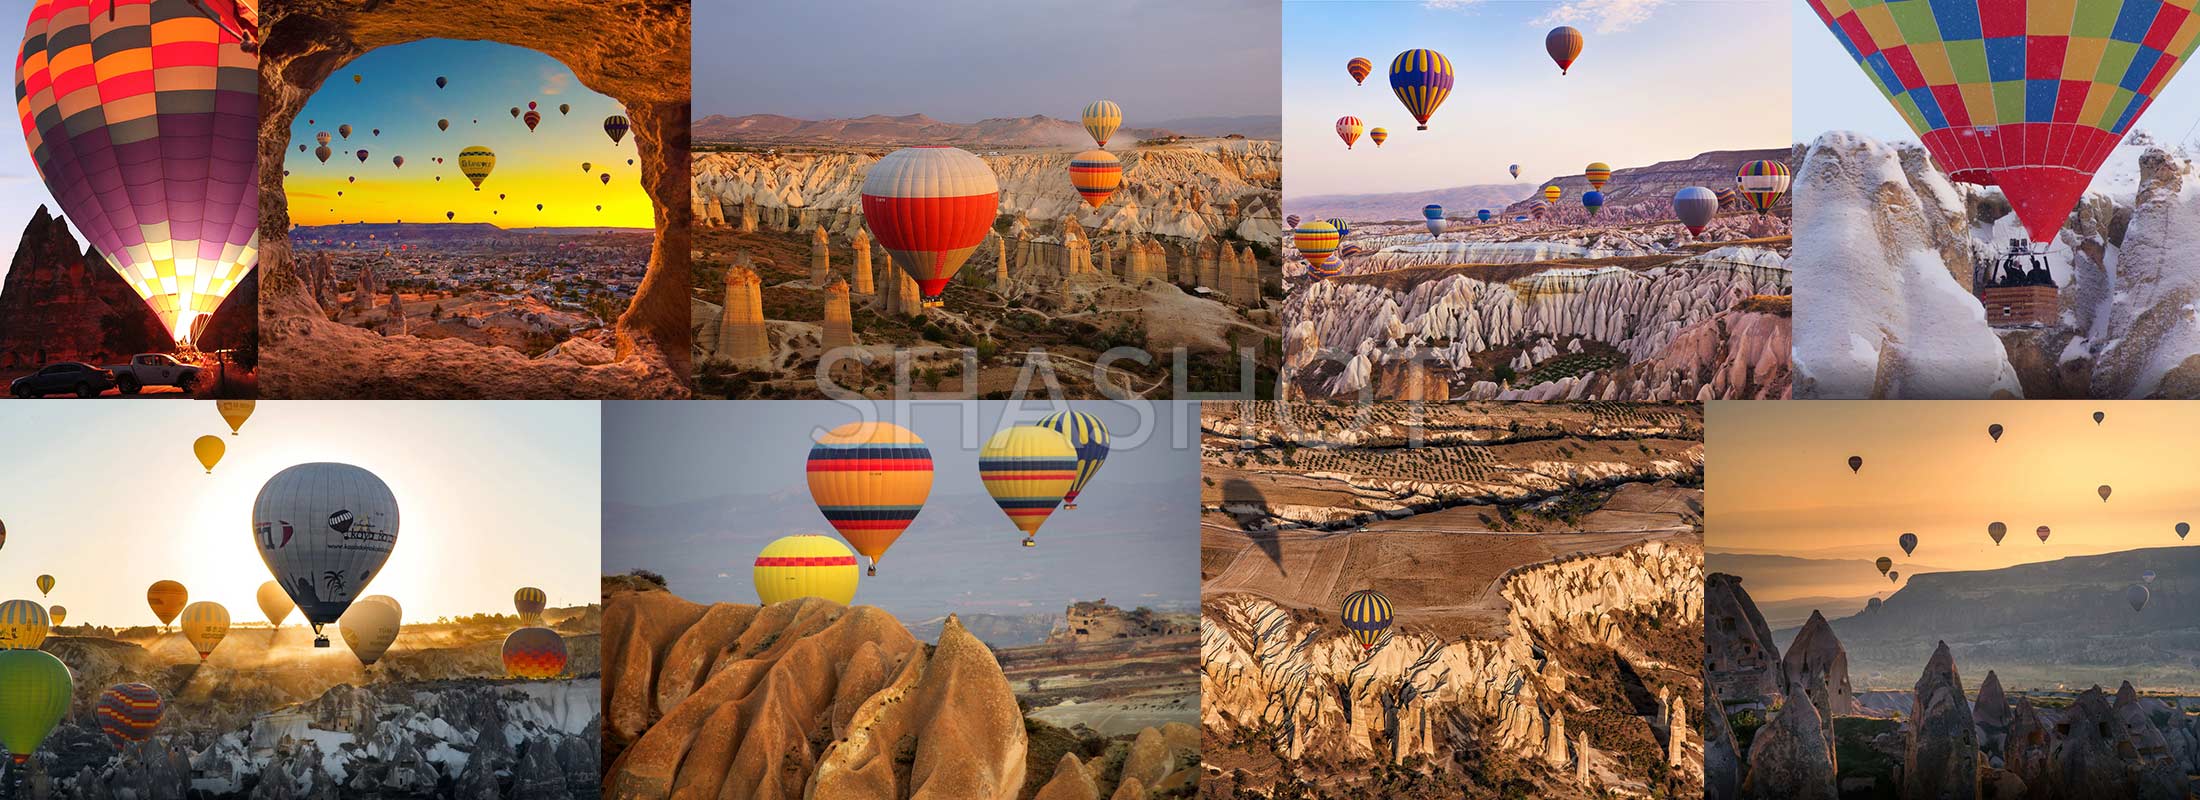 Cappadocia HOT AIR BALLOON TOURS IN TURKEY